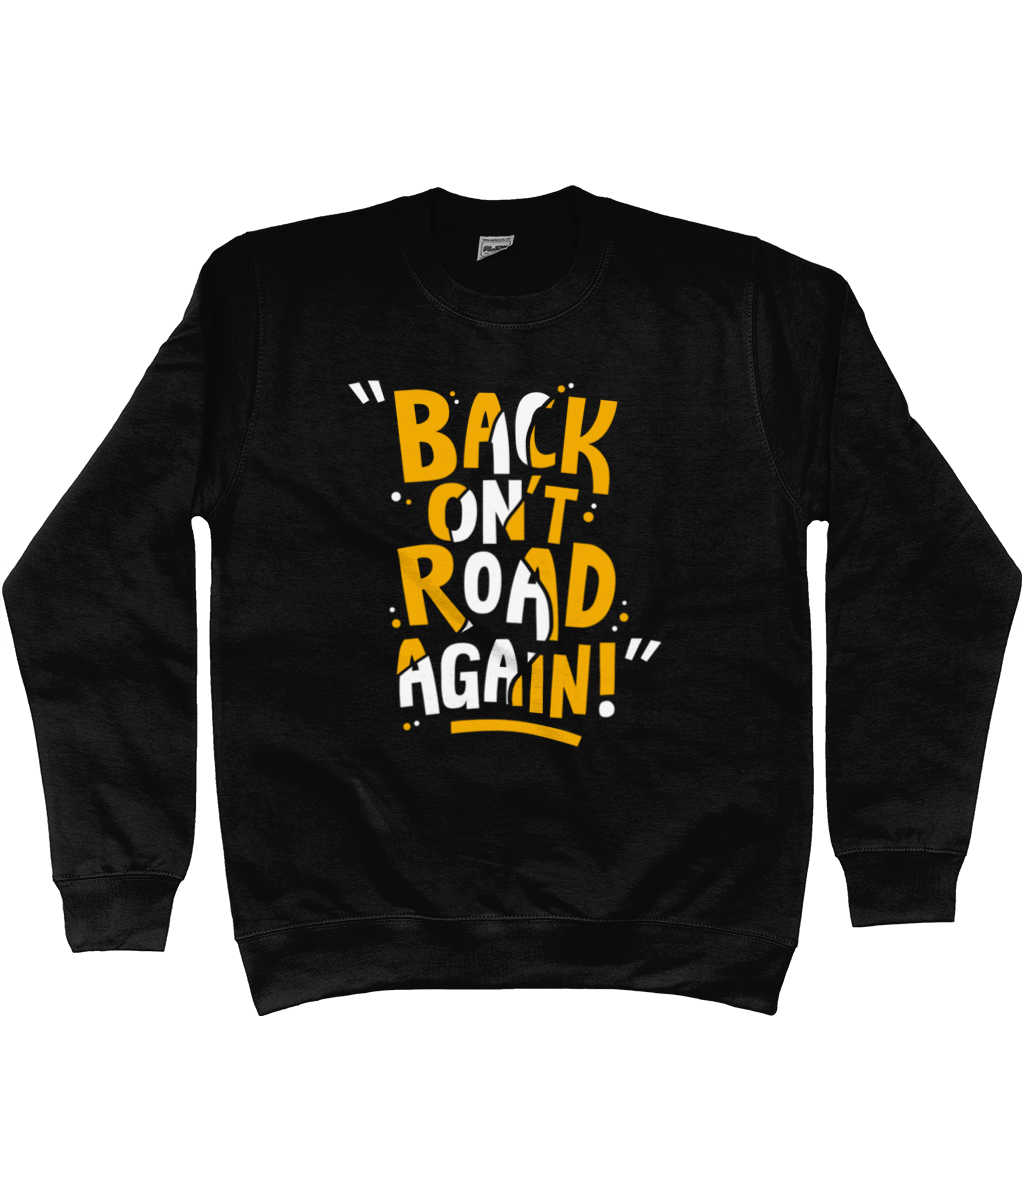 Back On't Road Again Sweatshirt